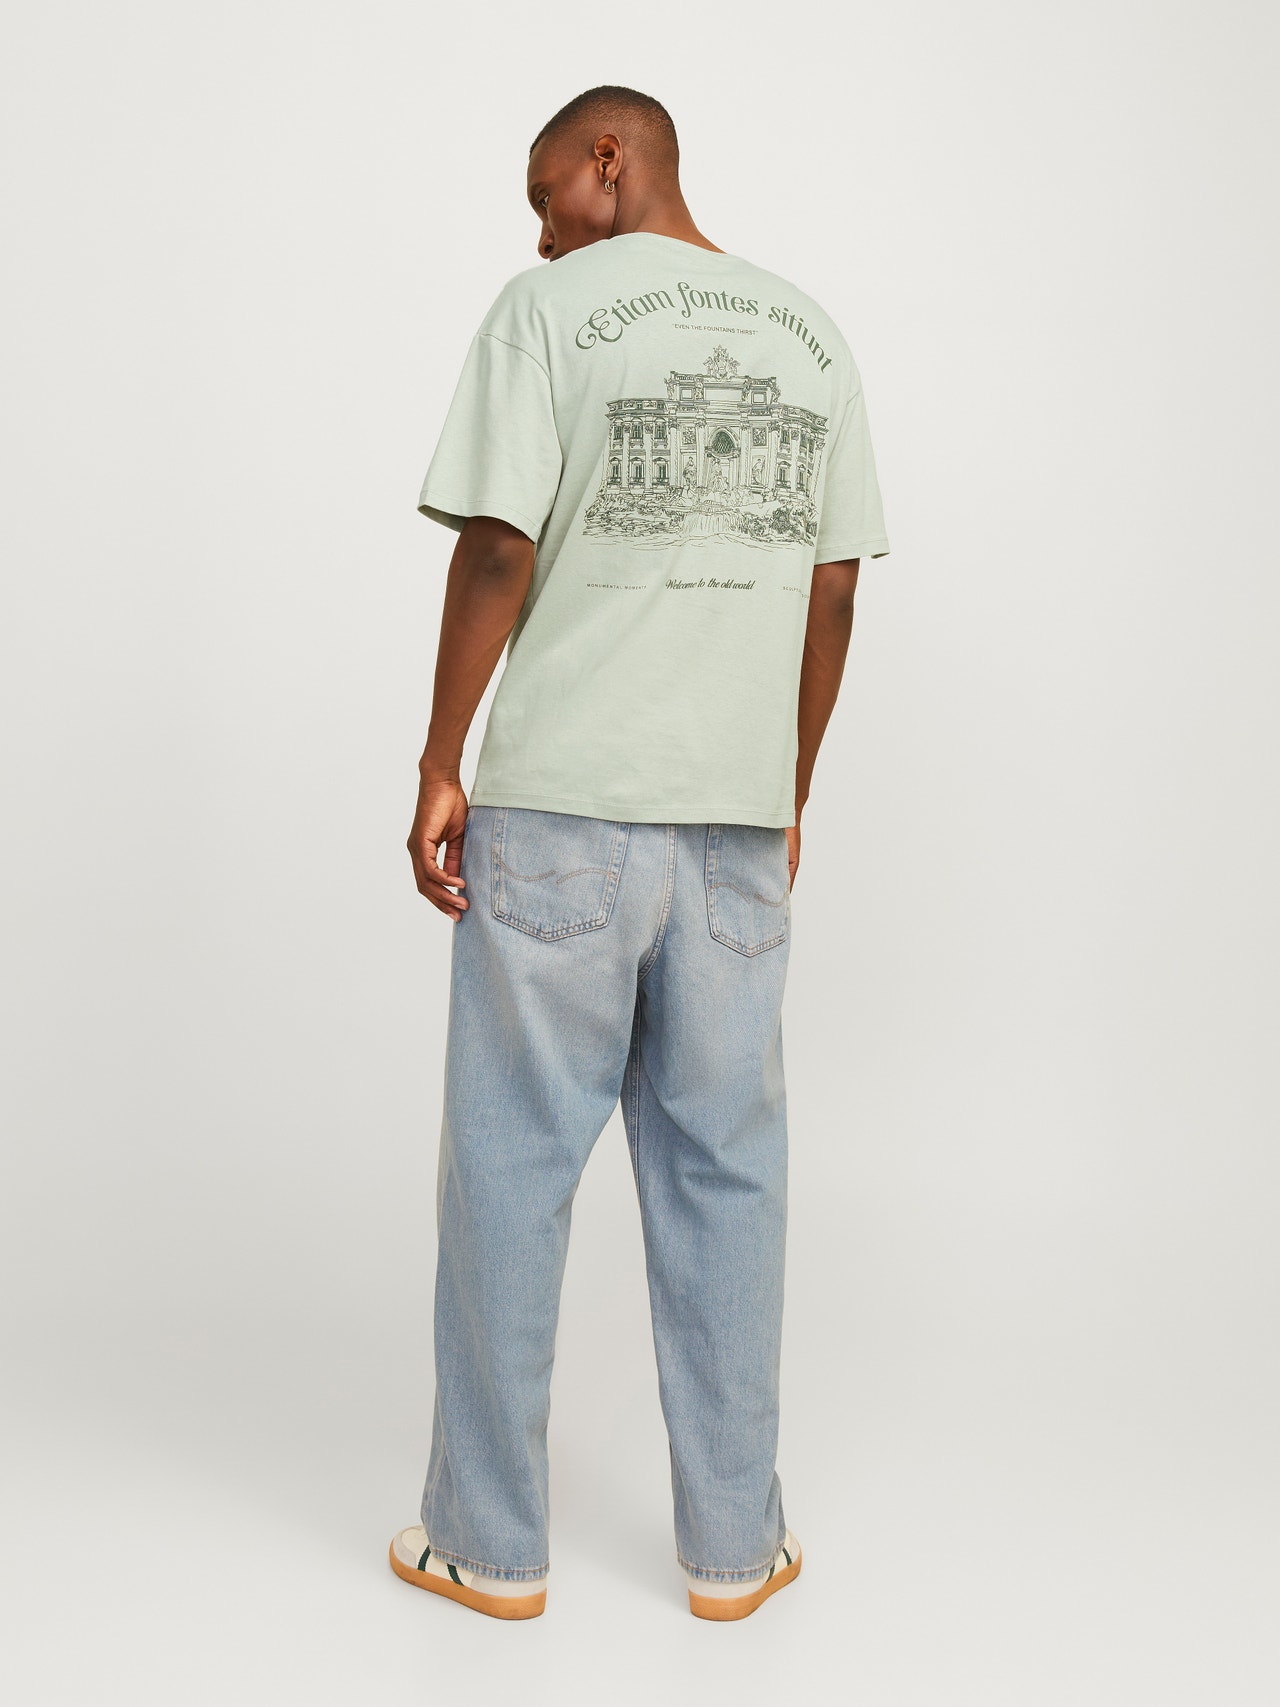 Jack & Jones T-shirt Estampar Decote Redondo -Desert Sage - 12273445